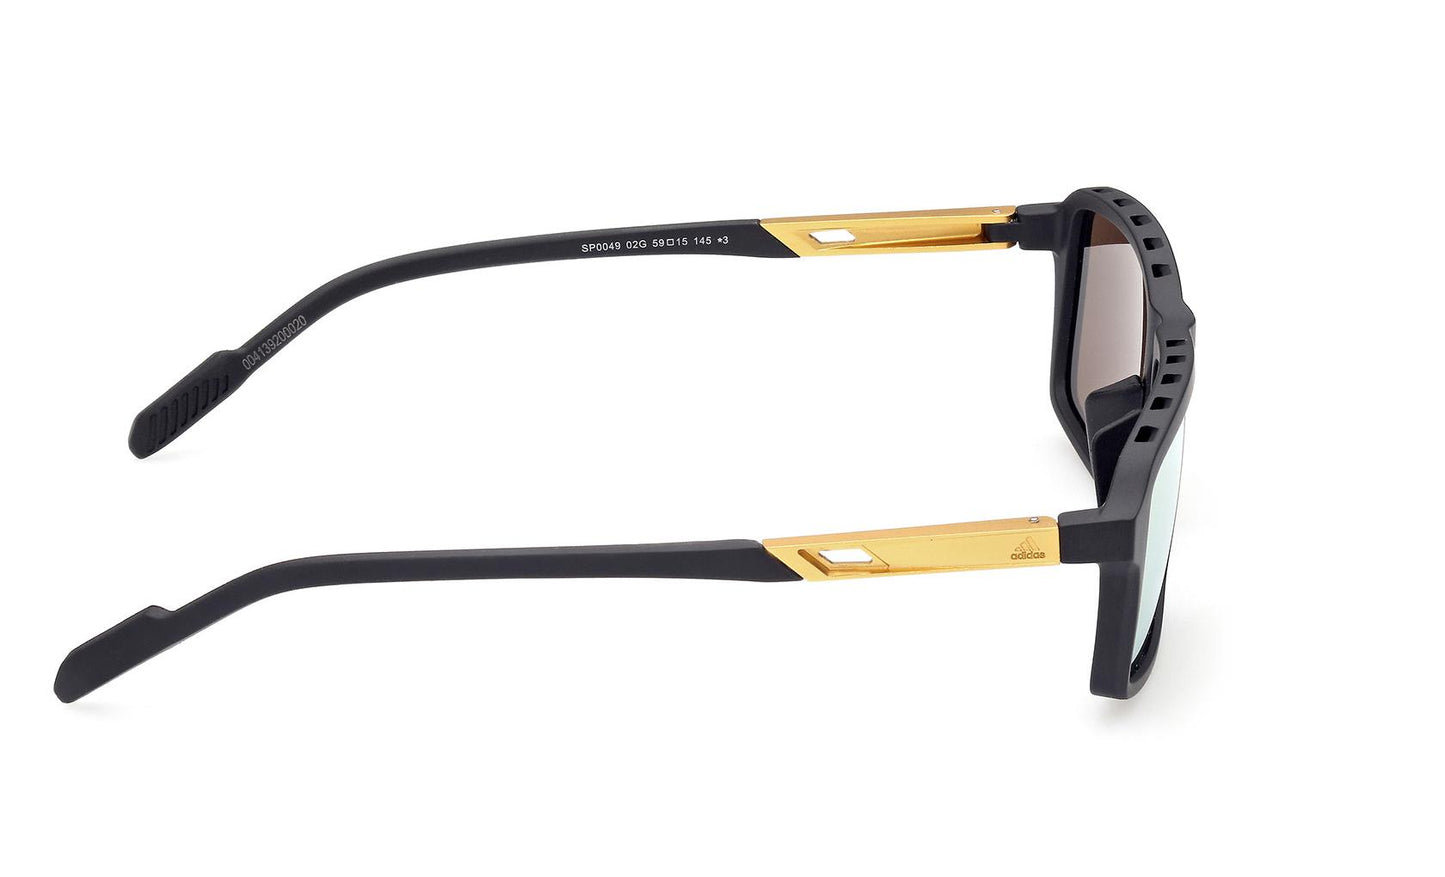 Adidas Sport Sunglasses 02G MATTE BLACK